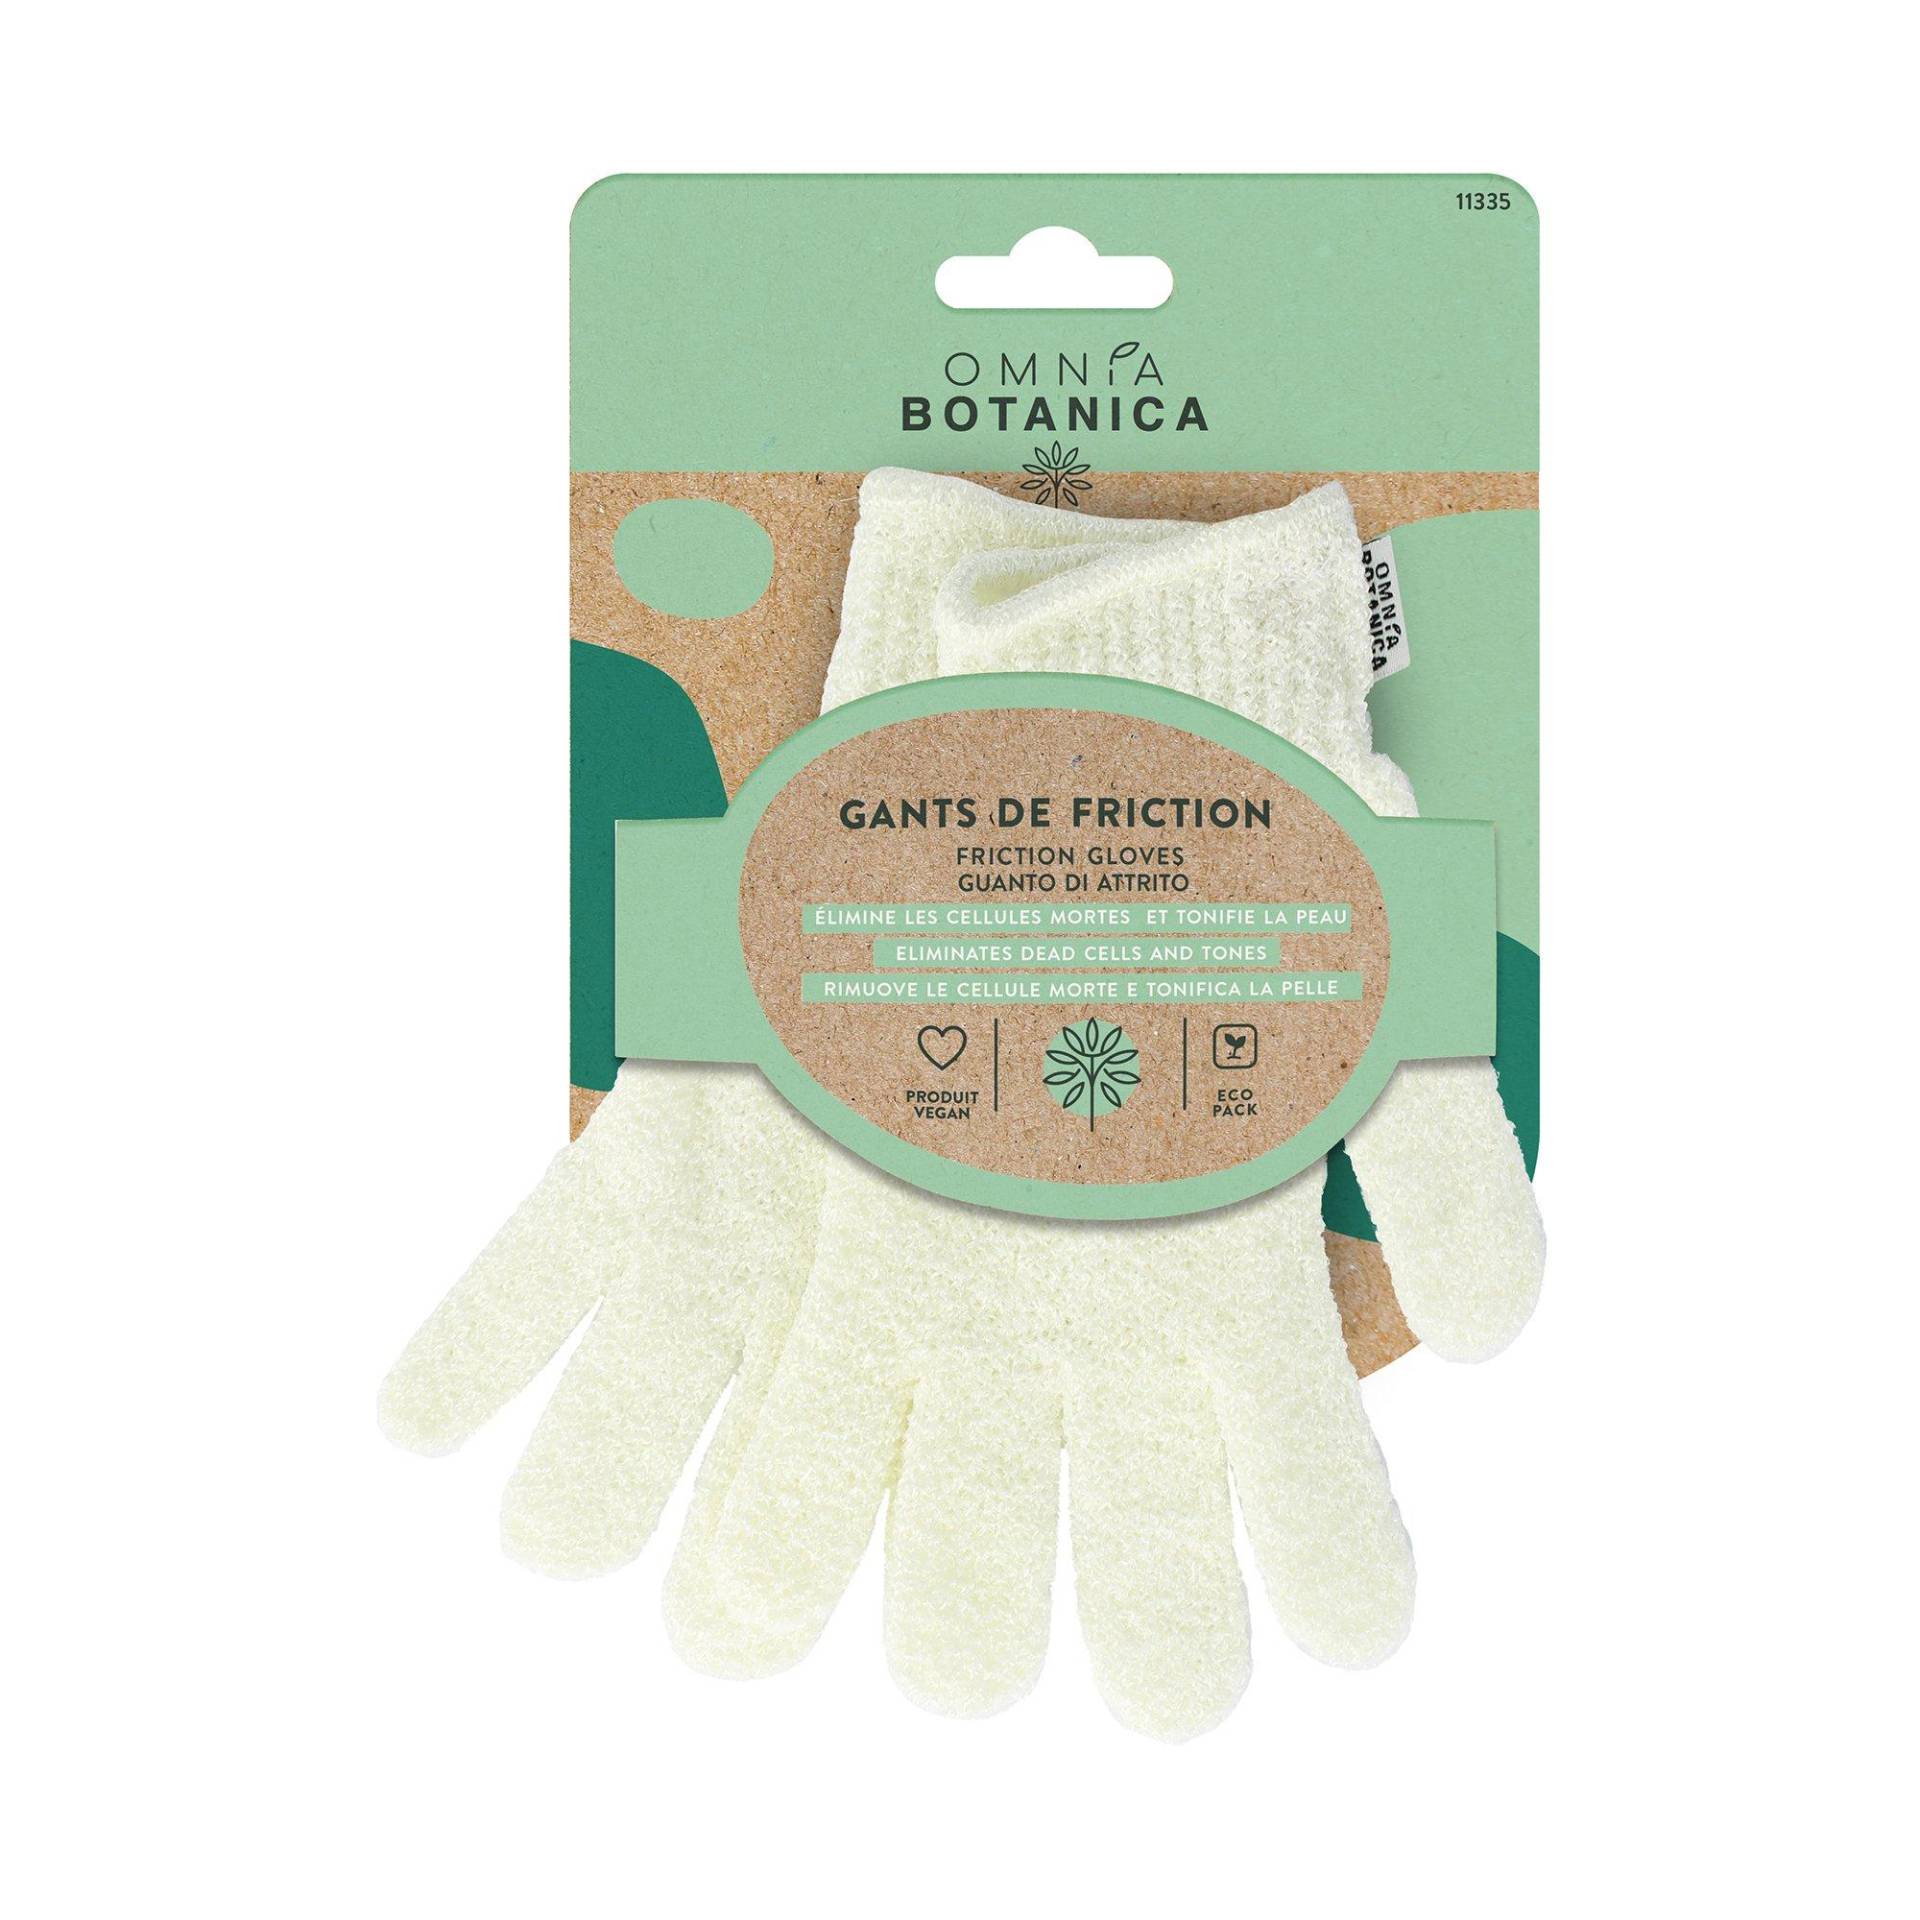 Peelinghandschuh Damen  2 pezzi von Omnia Botanica